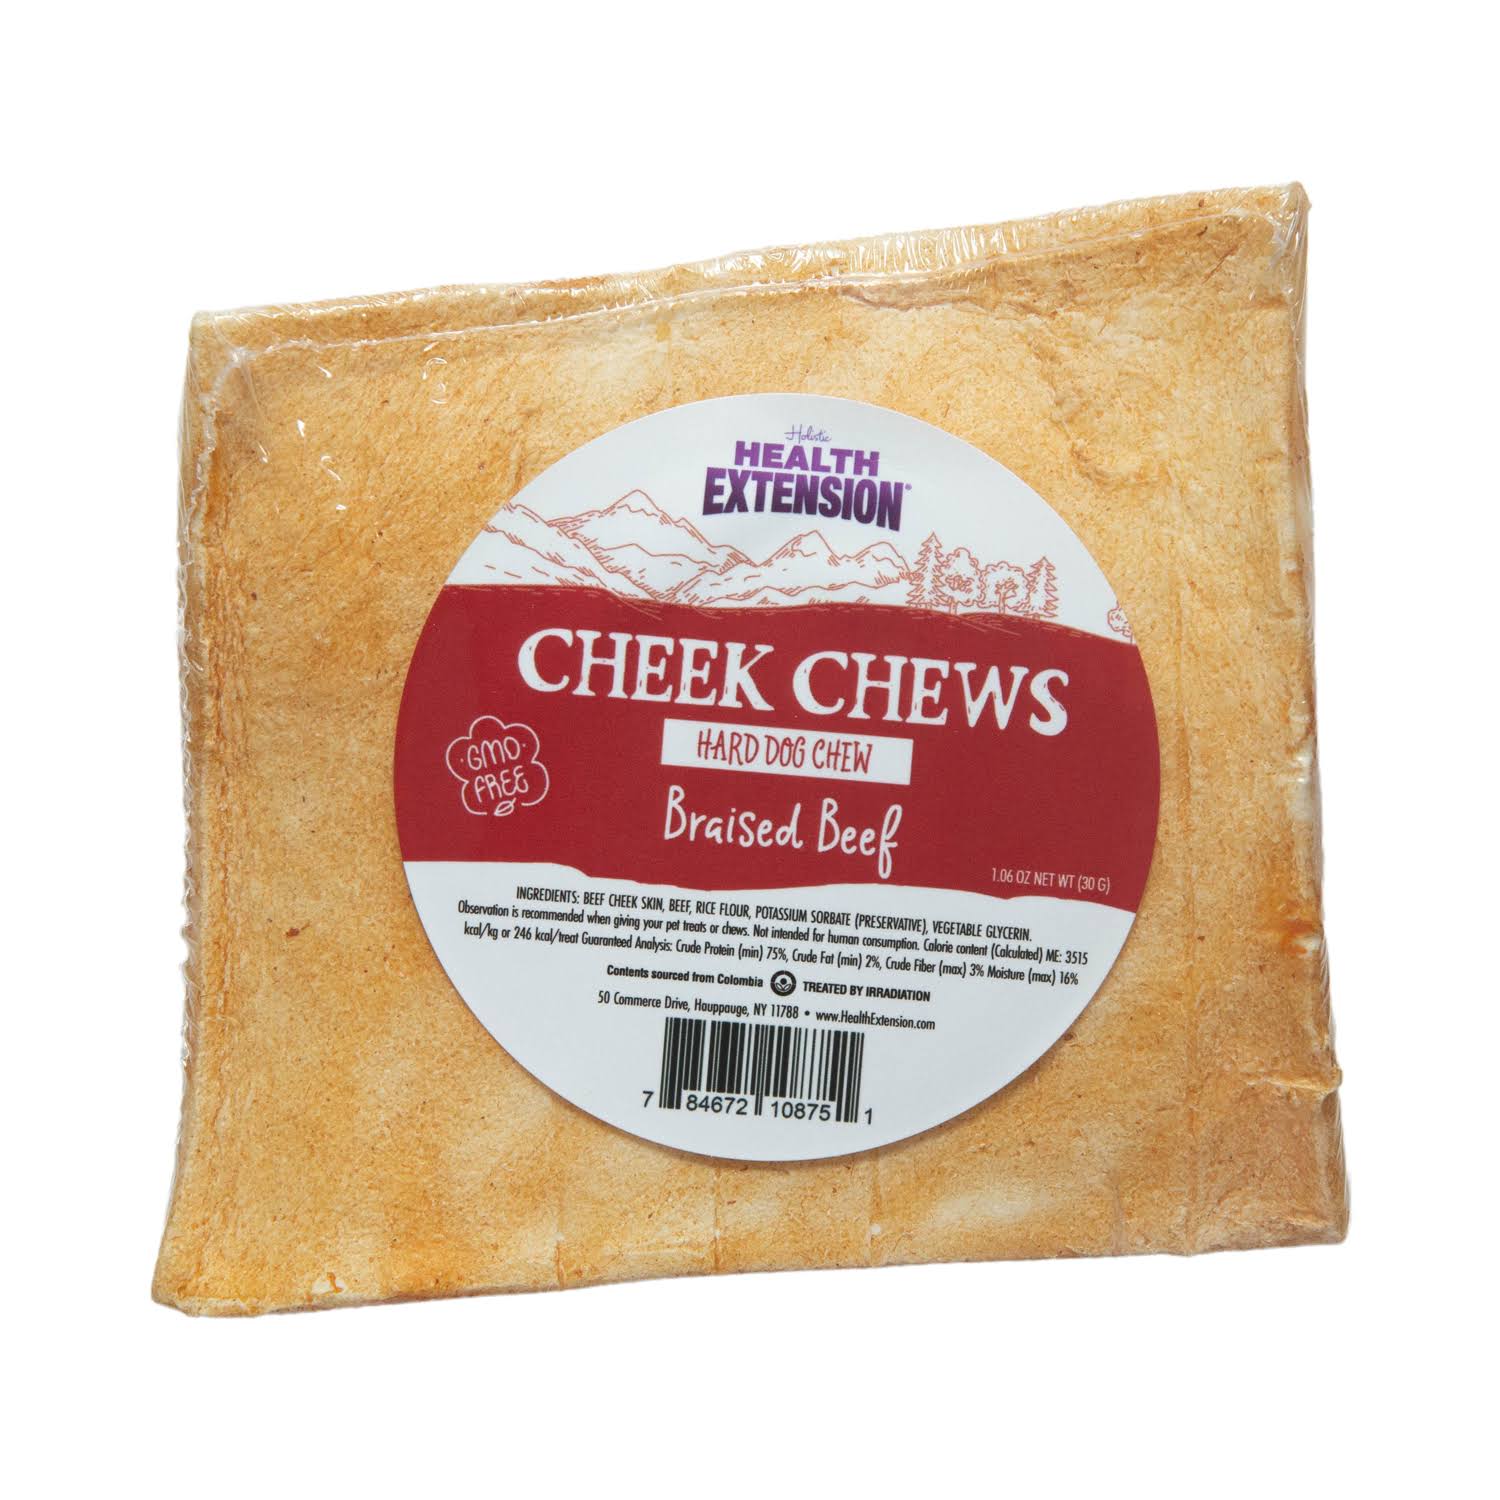 Health Extension Cheek Chews - Braised Beef - 1.06 oz